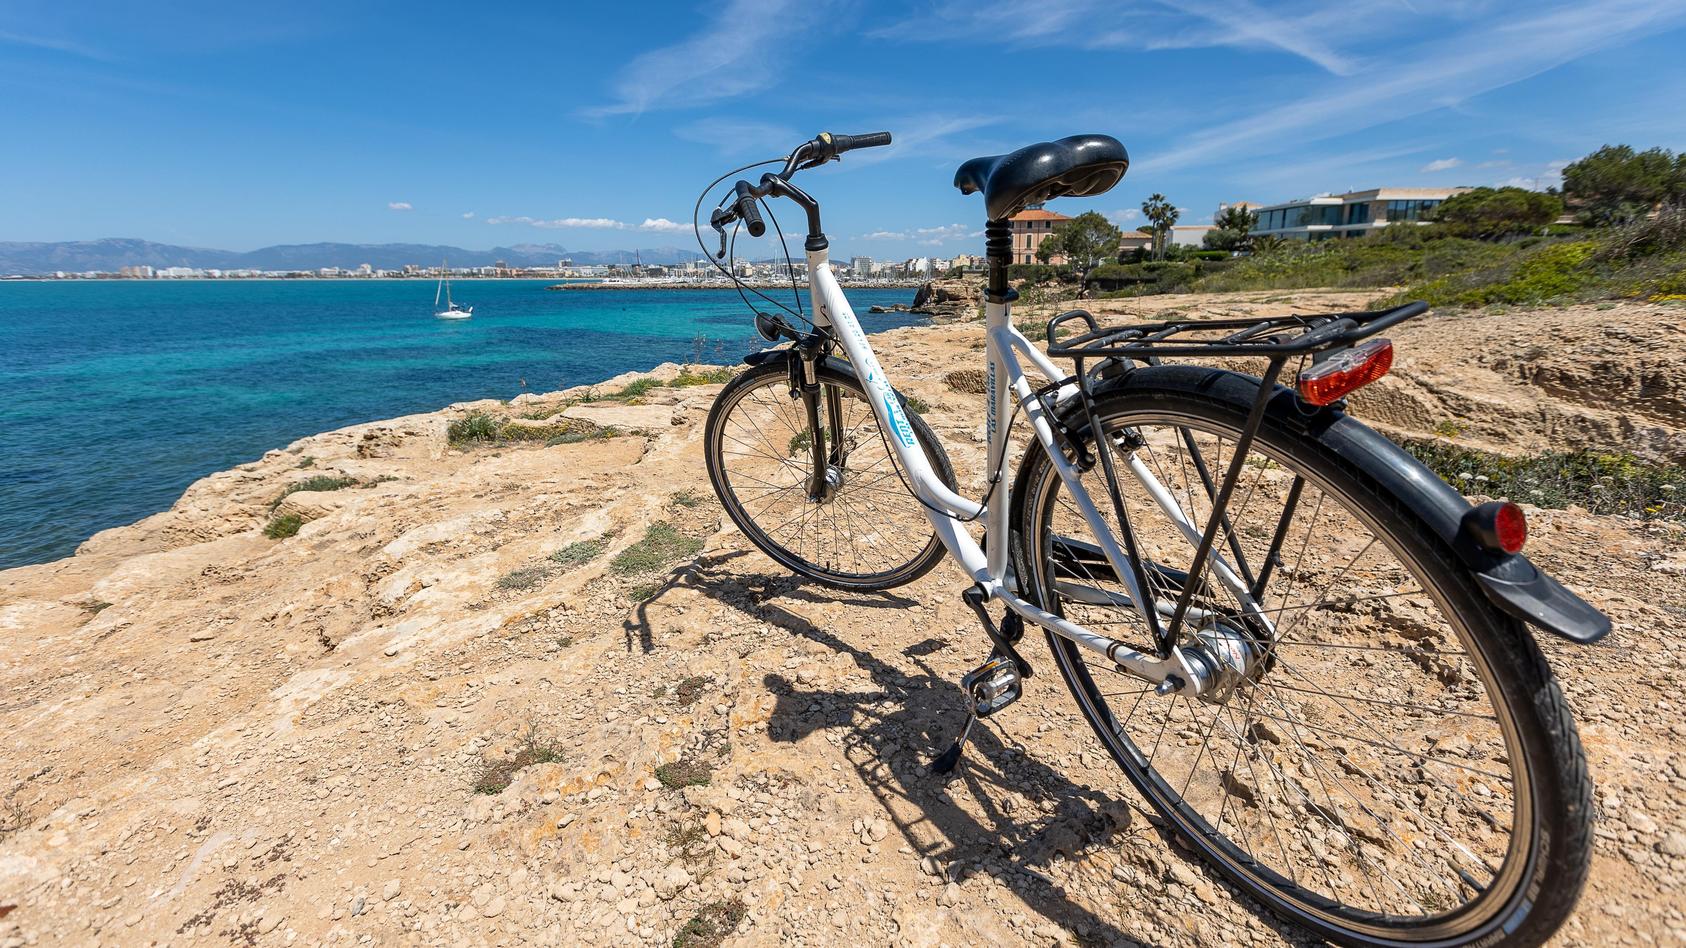 Themenbilder: Urlaub auf Mallorca, Blick auf Meer, Outdoor Aktivitaet, Playa Calo de Sant Antoni, 25.04.2022,